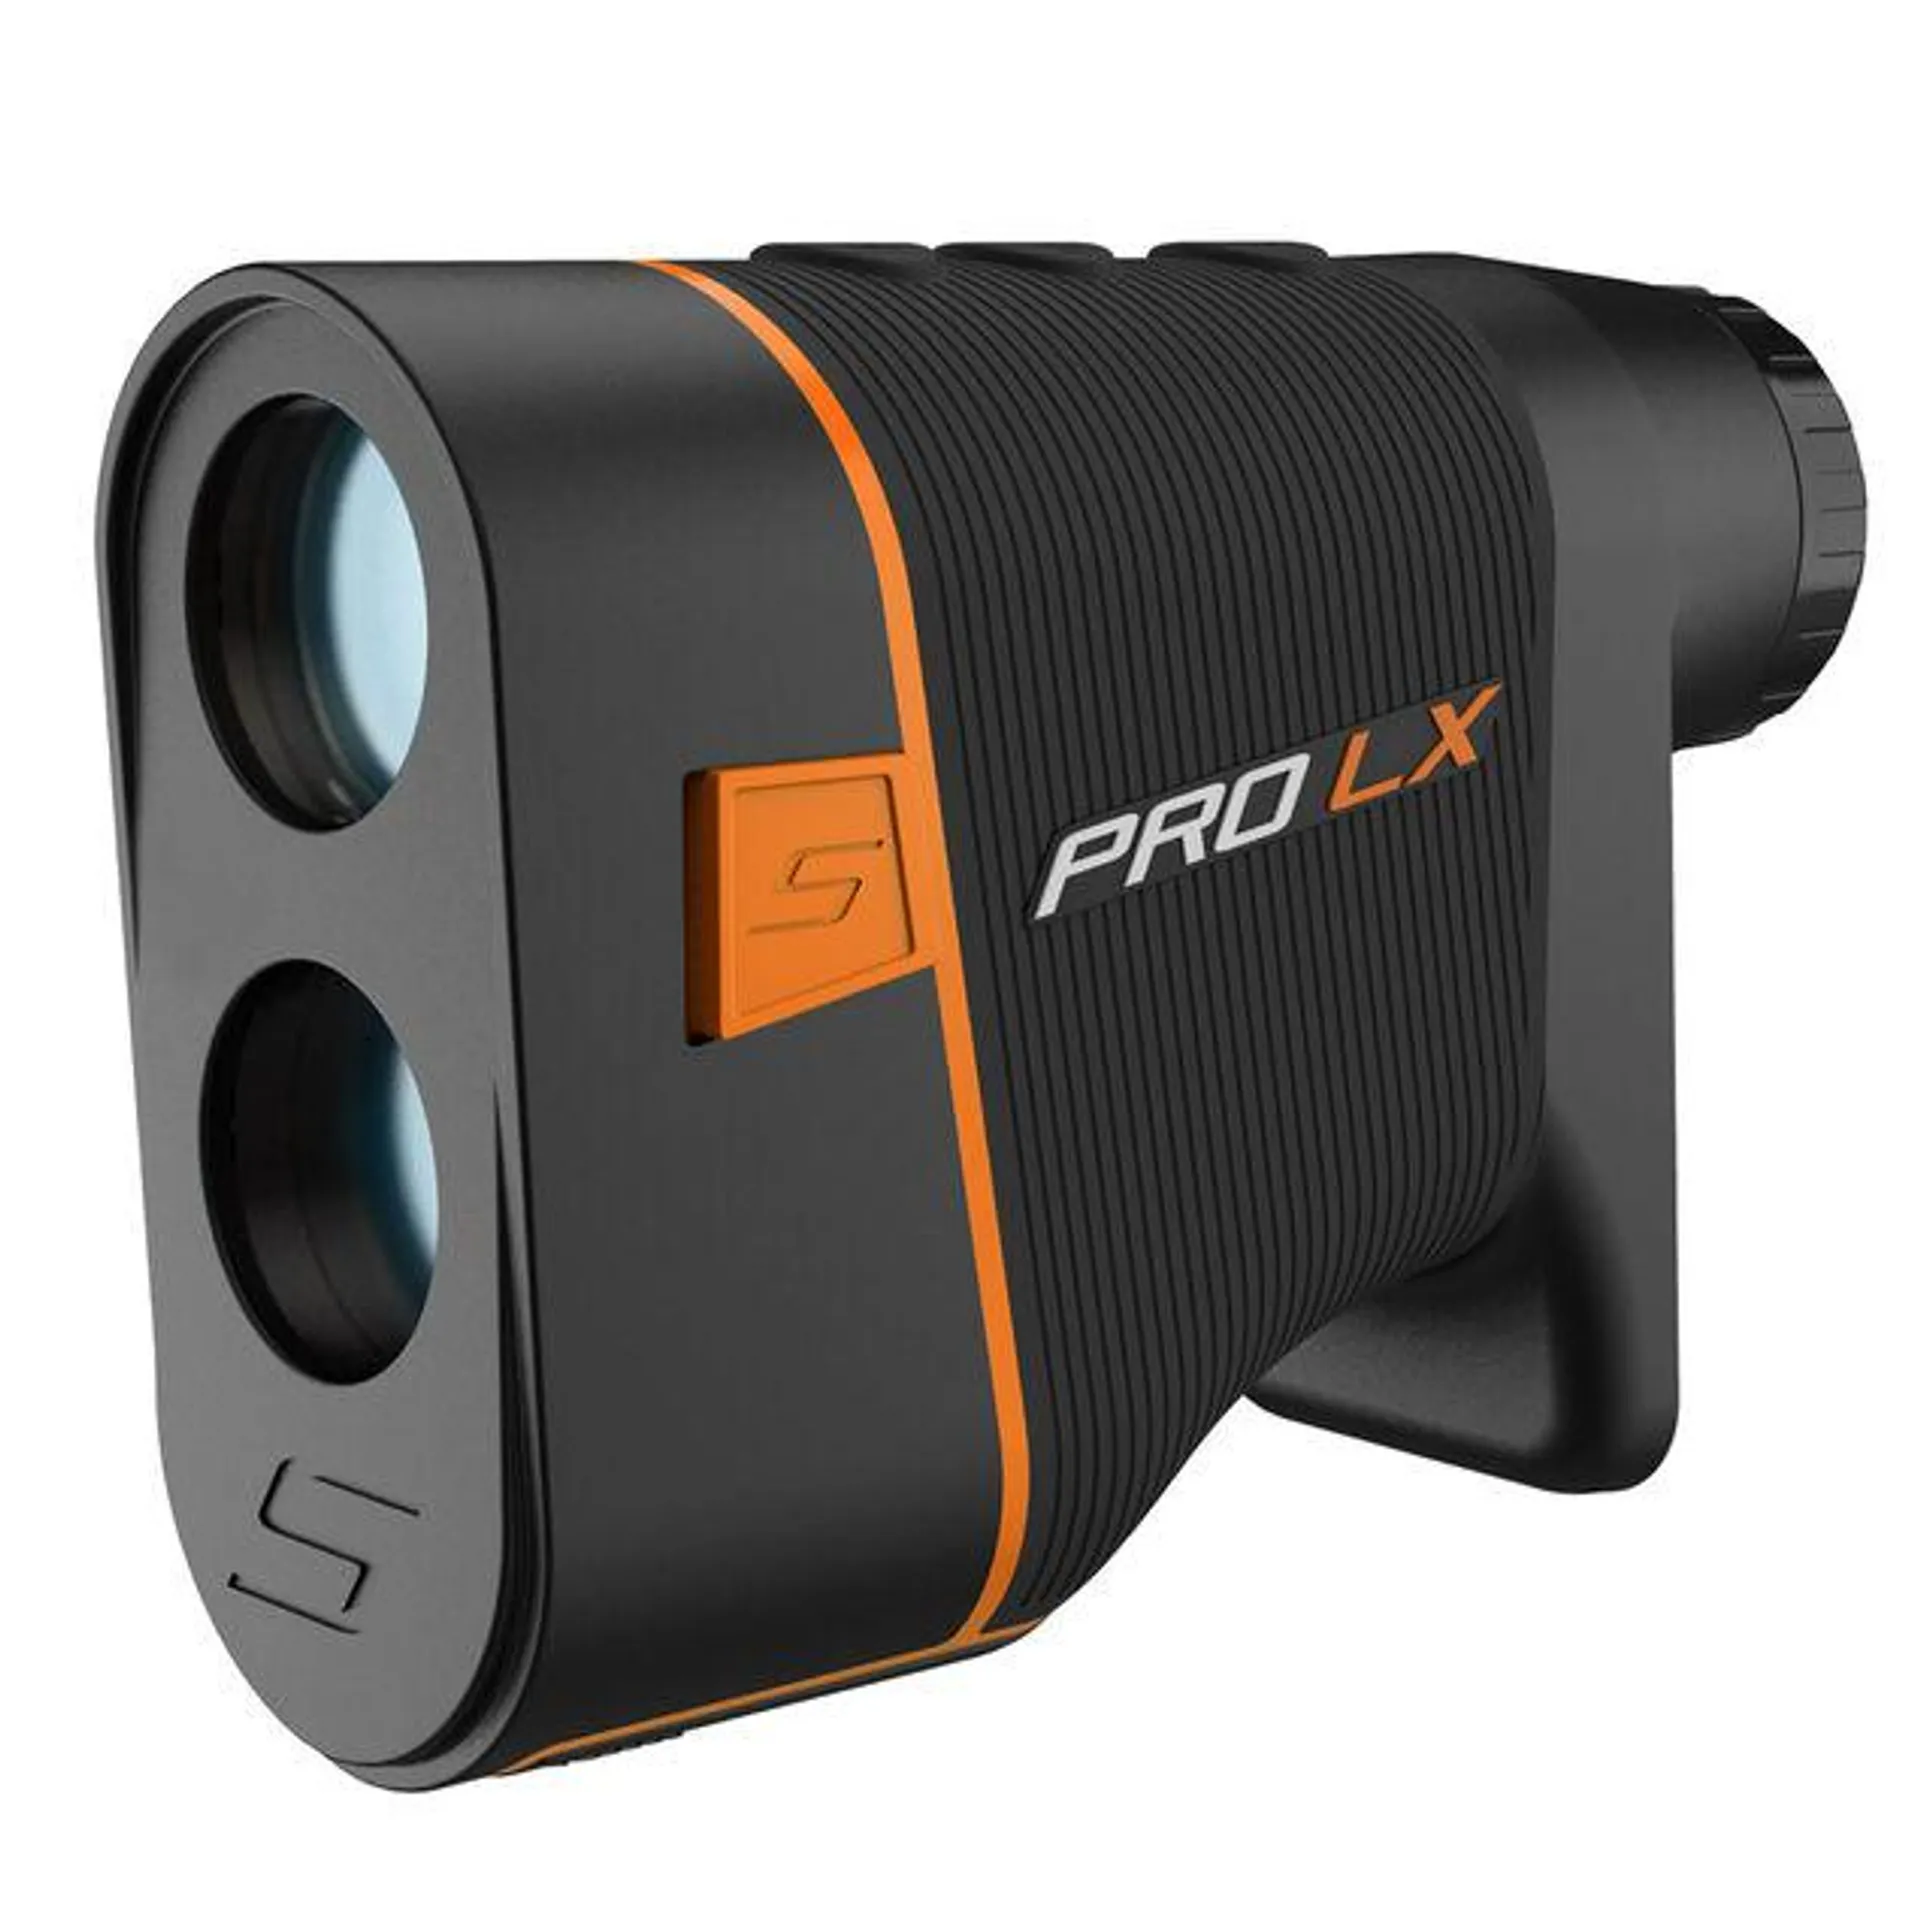 Shot Scope PRO LX Laser Golf Rangefinder